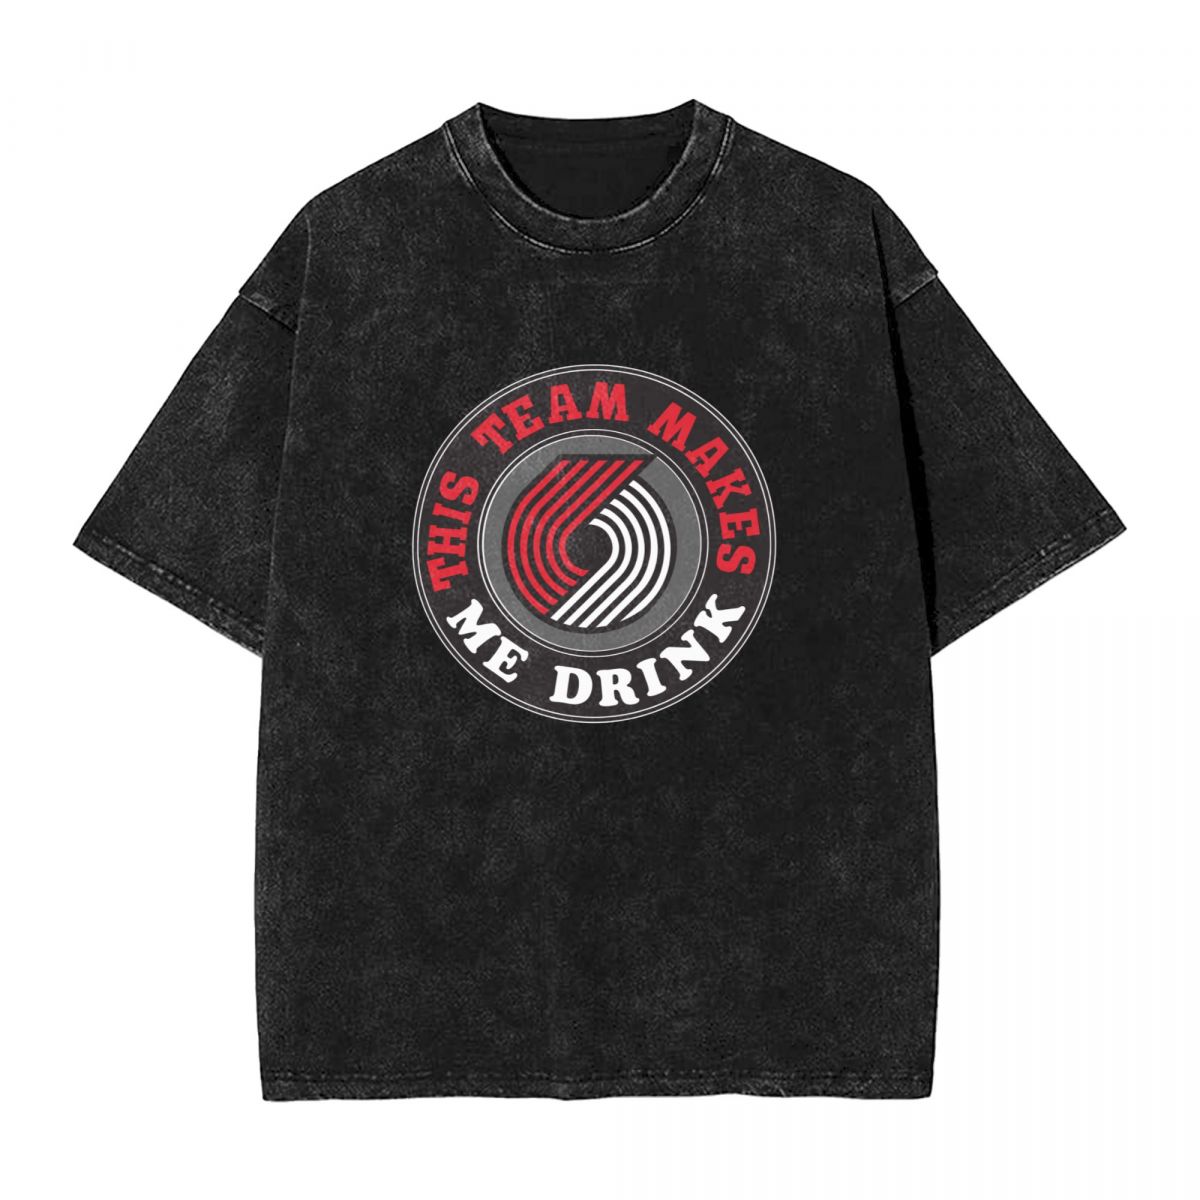 Portland Trail Blazers This Team Makes Me Drink Printed Vintage Men's Oversized T-Shirt